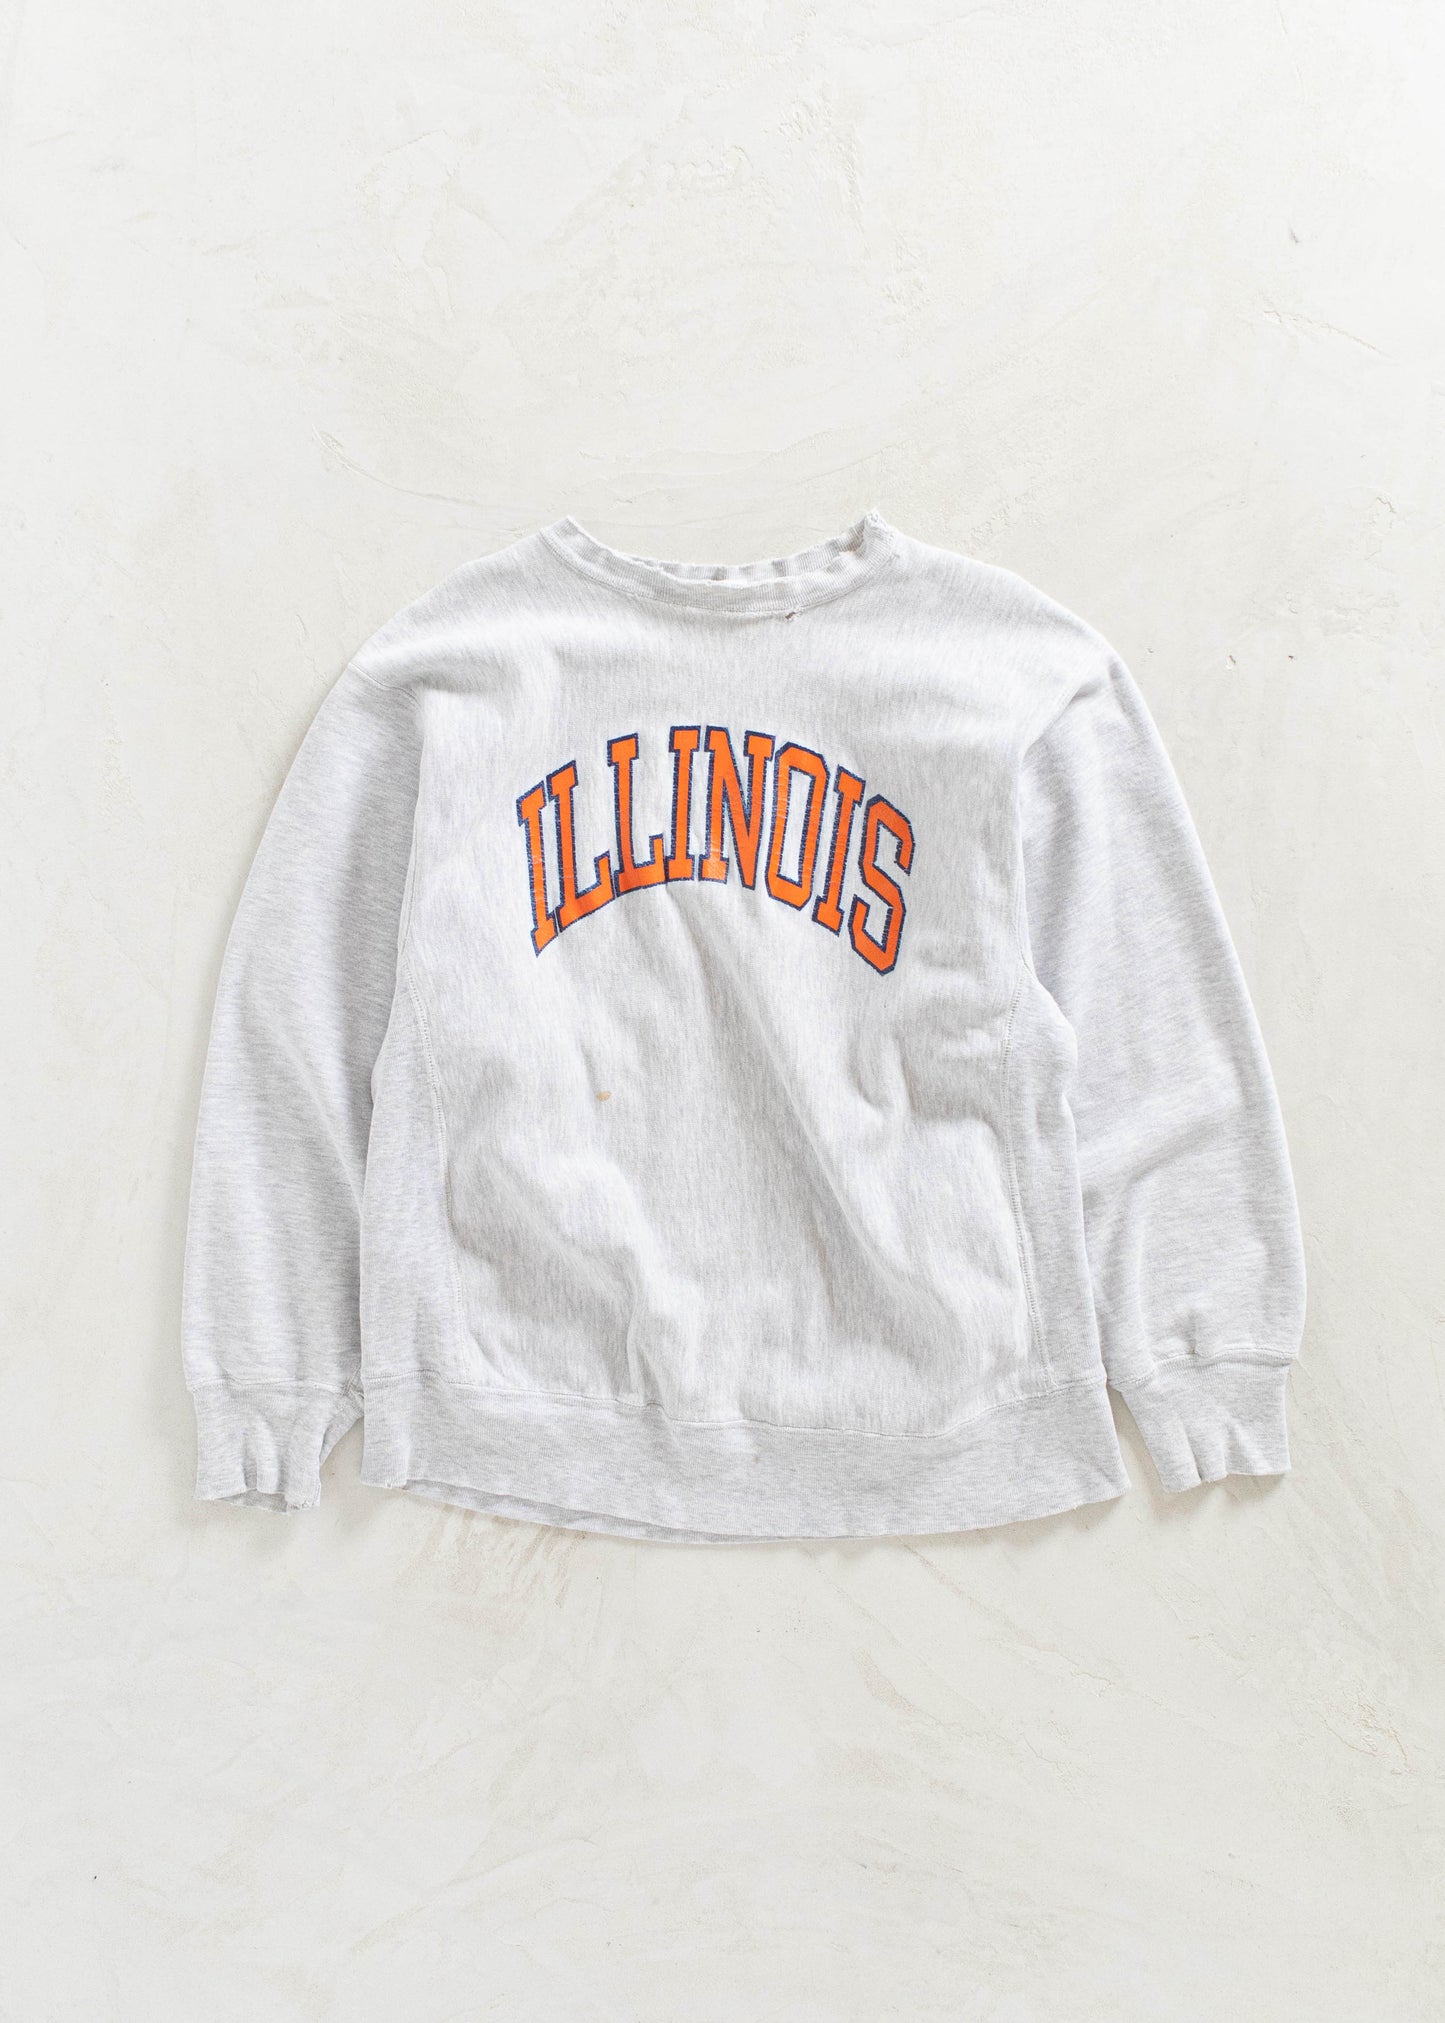 Vintage 1980s Champion Reverse Weave Warmup Illinois Sweatshirt Size M/L